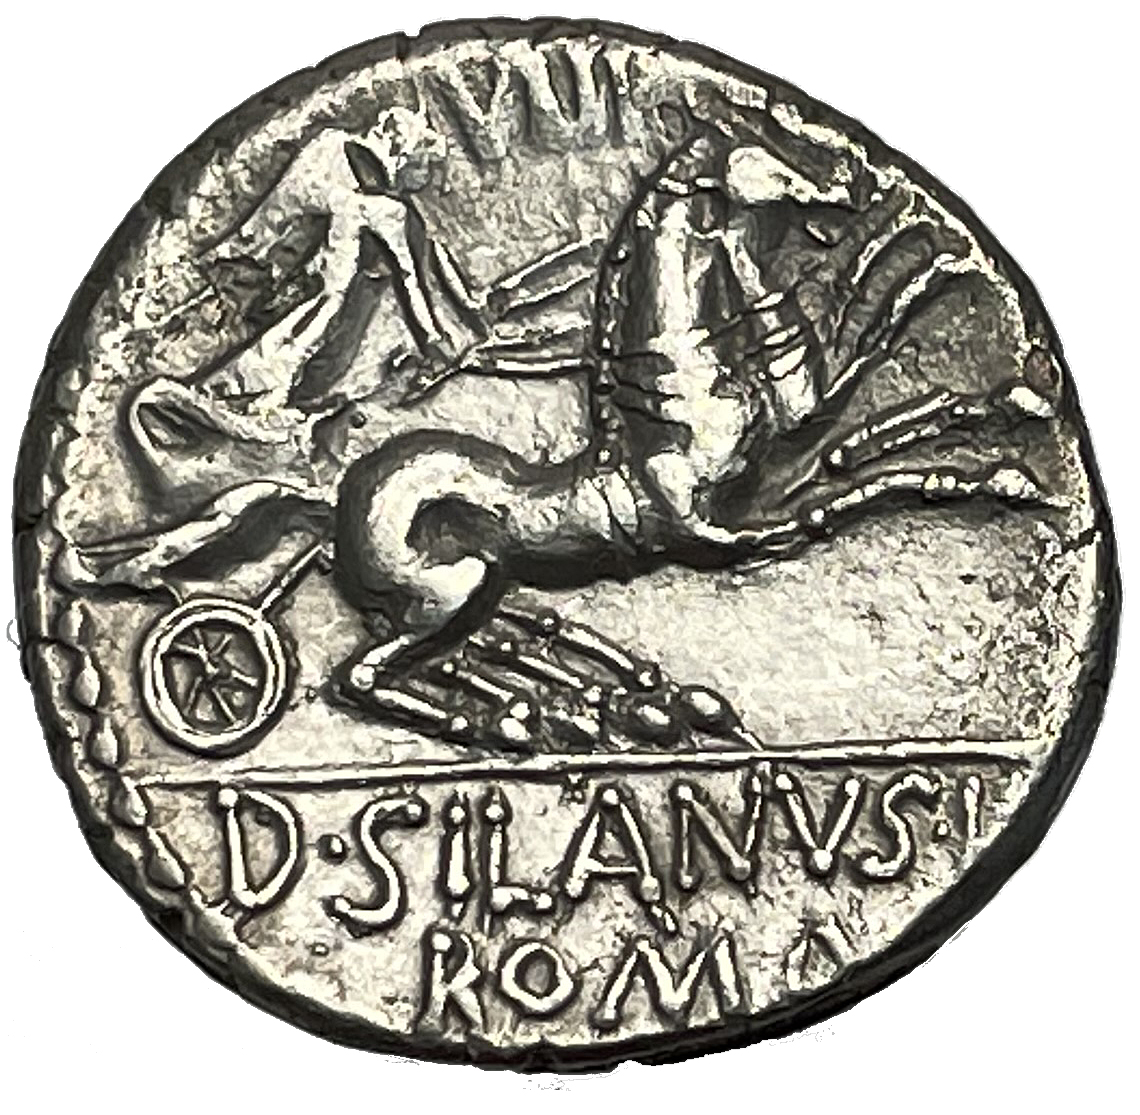 Romerska republiken, Denar, D. Silanus 91 f.Kr.